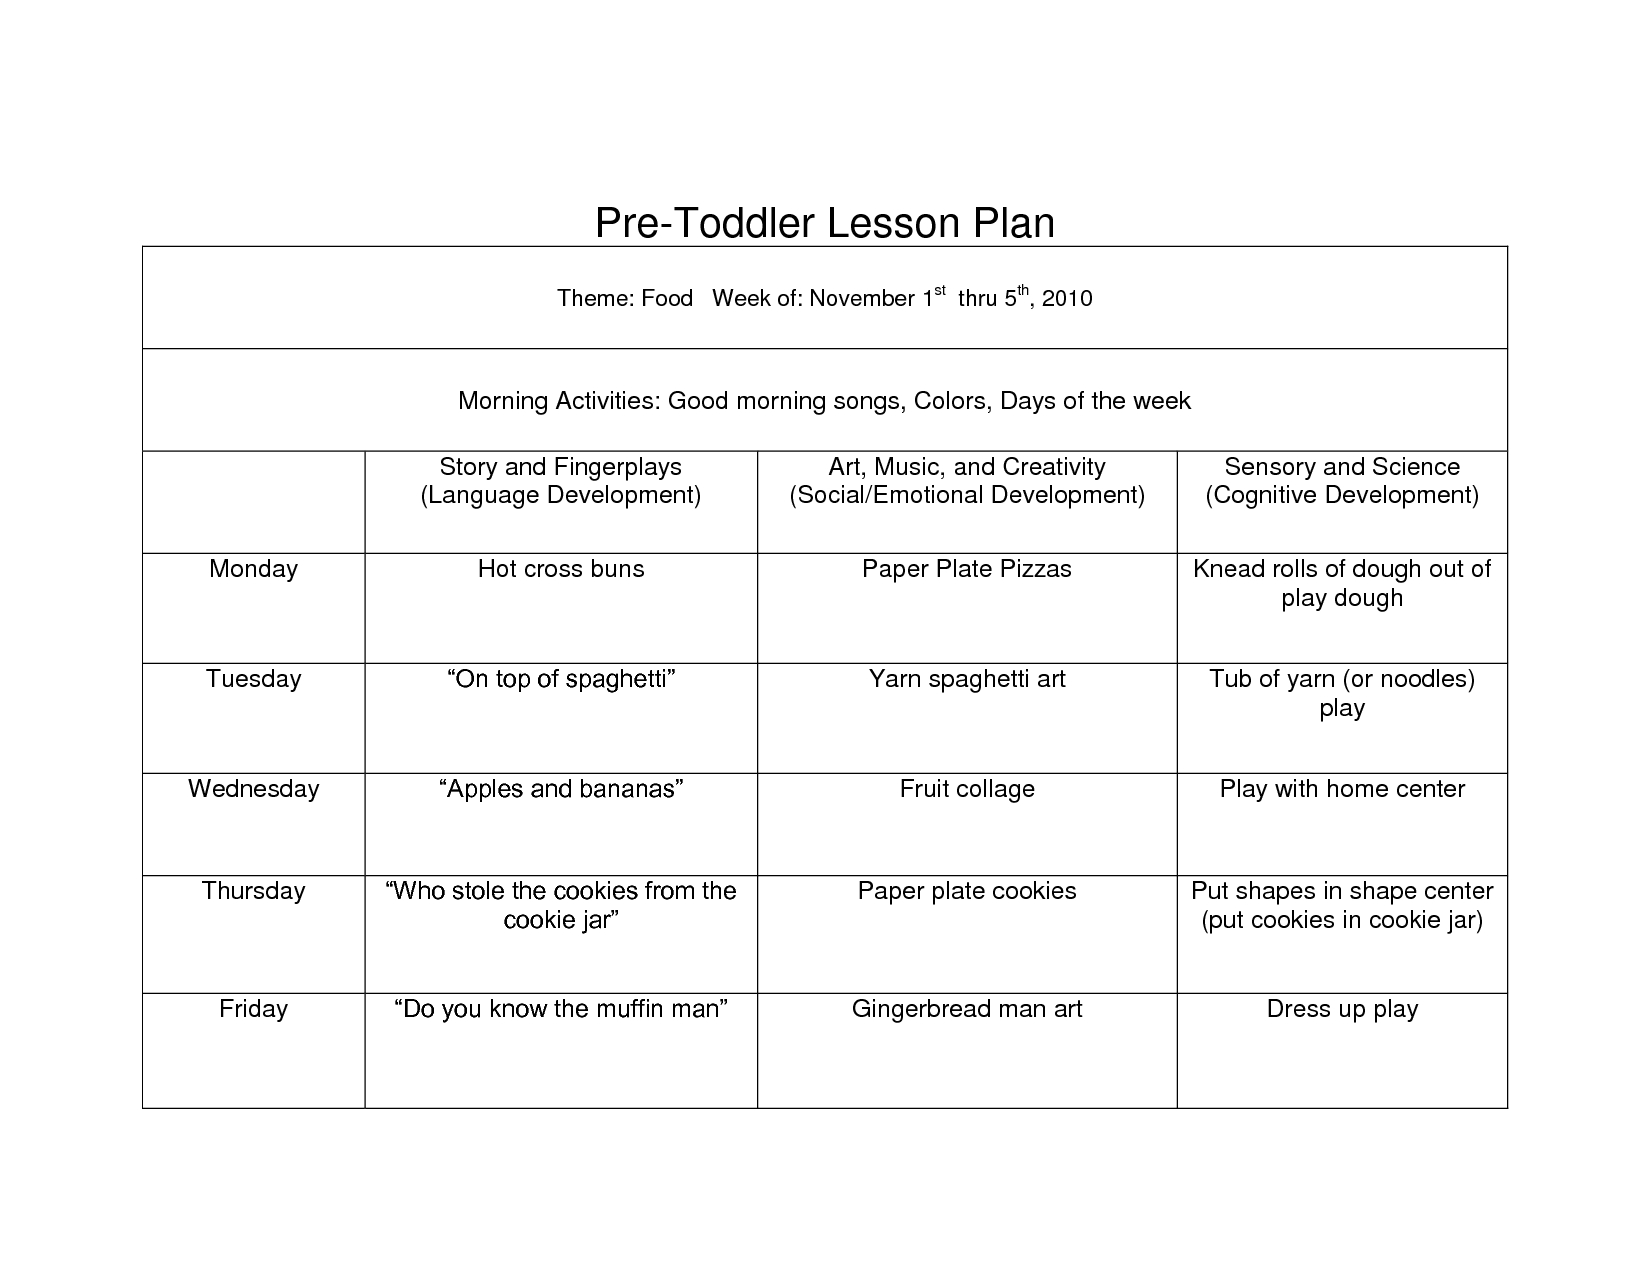 Creative Curriculum Blank Lesson Plan | Wcc Pre Toddler